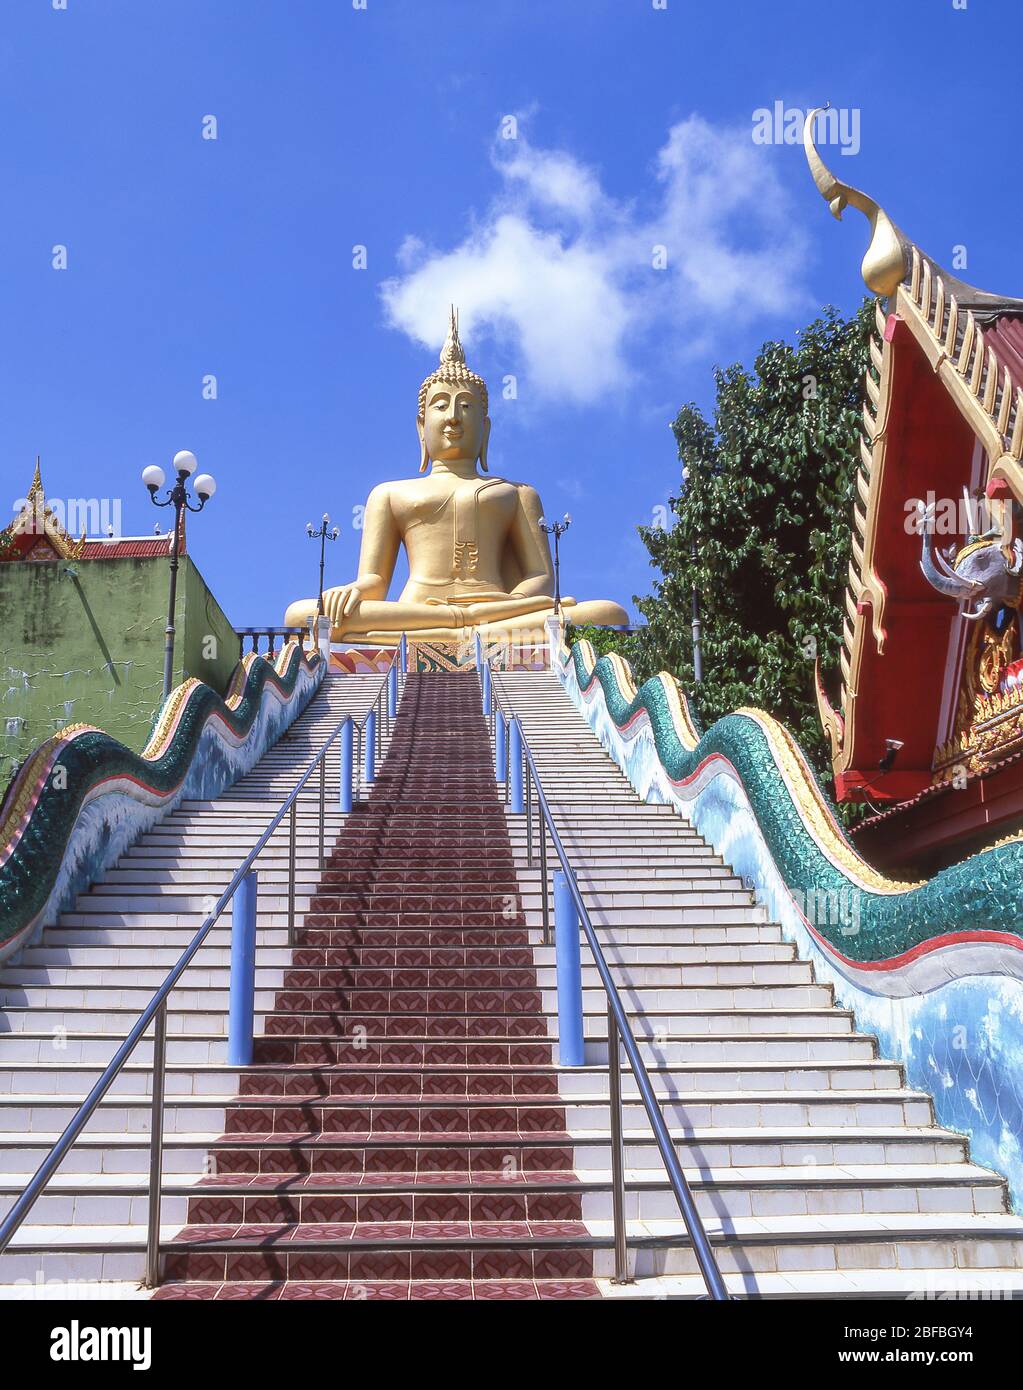 Le Grand Bouddha, Temple Phra Yai, Bo Phut, Koh Samui, Province de Surat Thani, Royaume de Thaïlande Banque D'Images